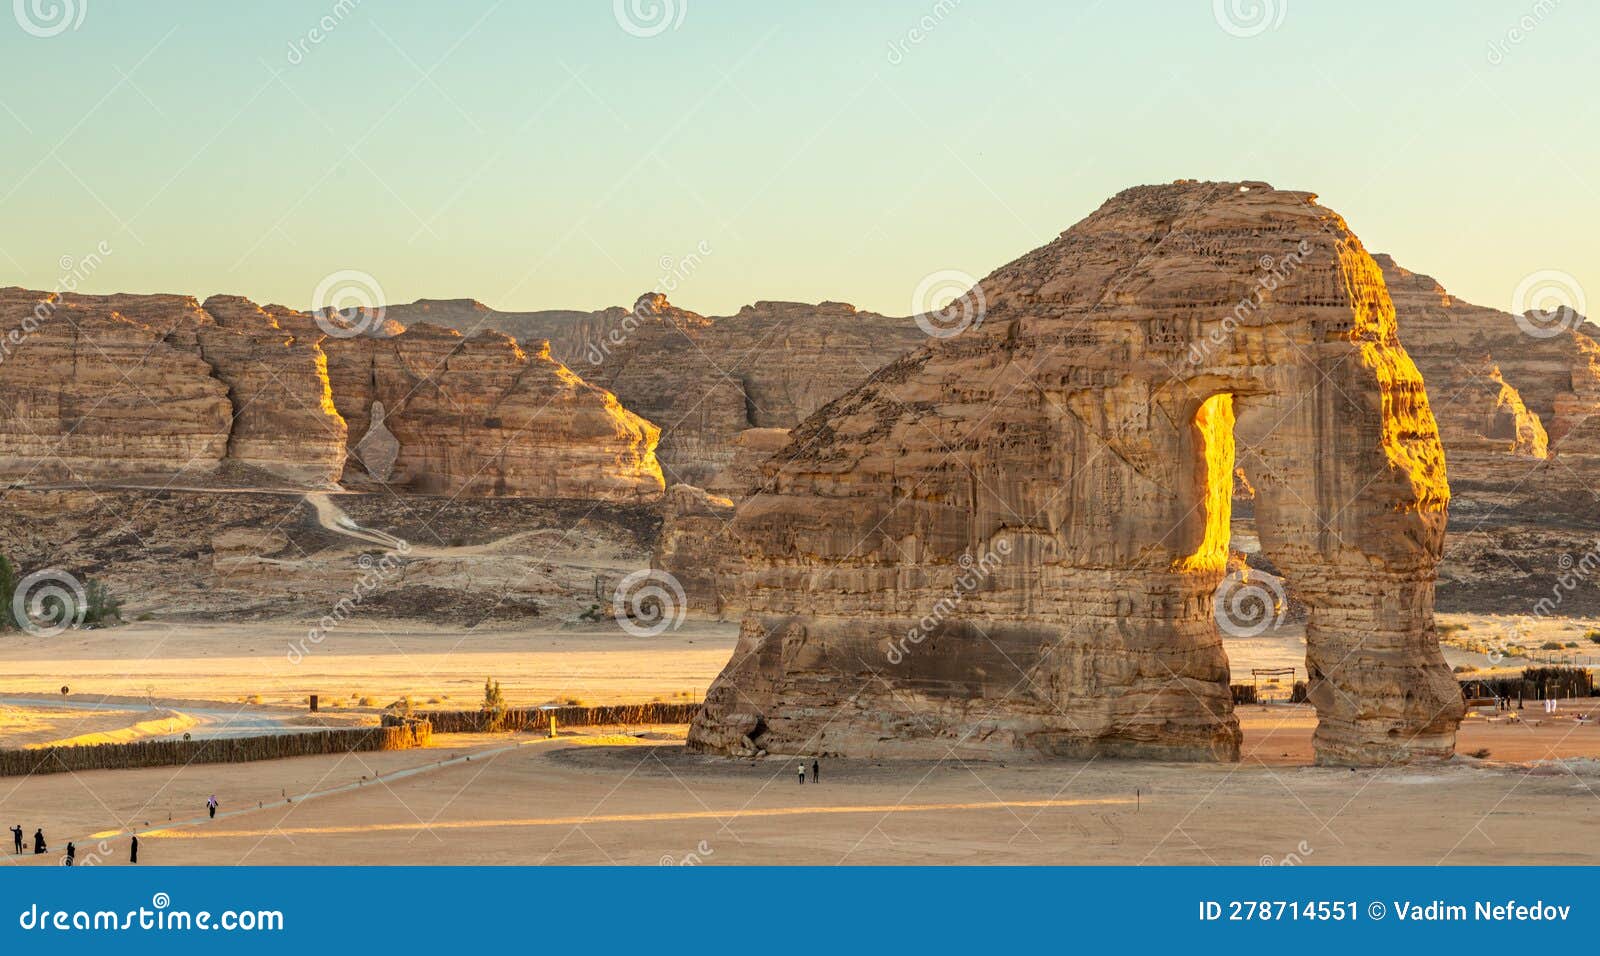 sandstone elephant rock erosion monolith standing in the desert, al ula, saudi arabia